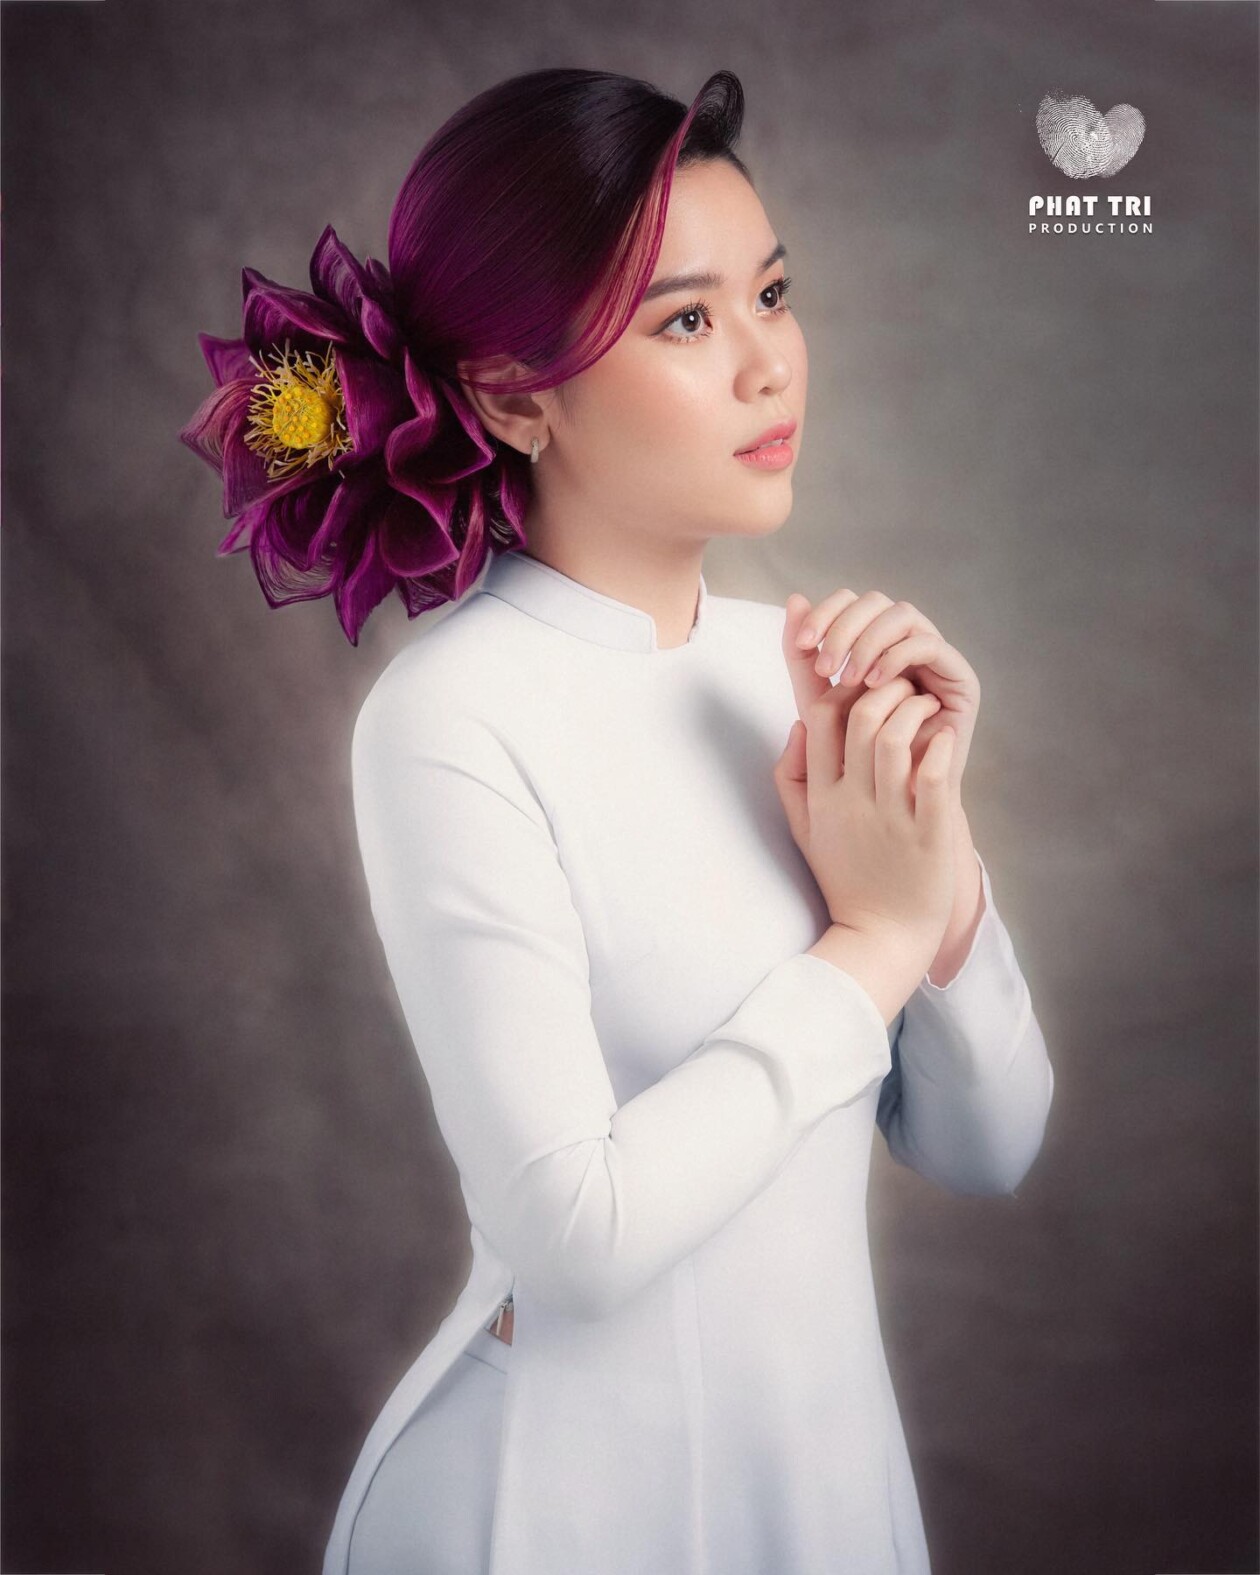 Beautiful Hairstyles That Look Like Ornate Flowers By Nguyen Phat Tri (9)